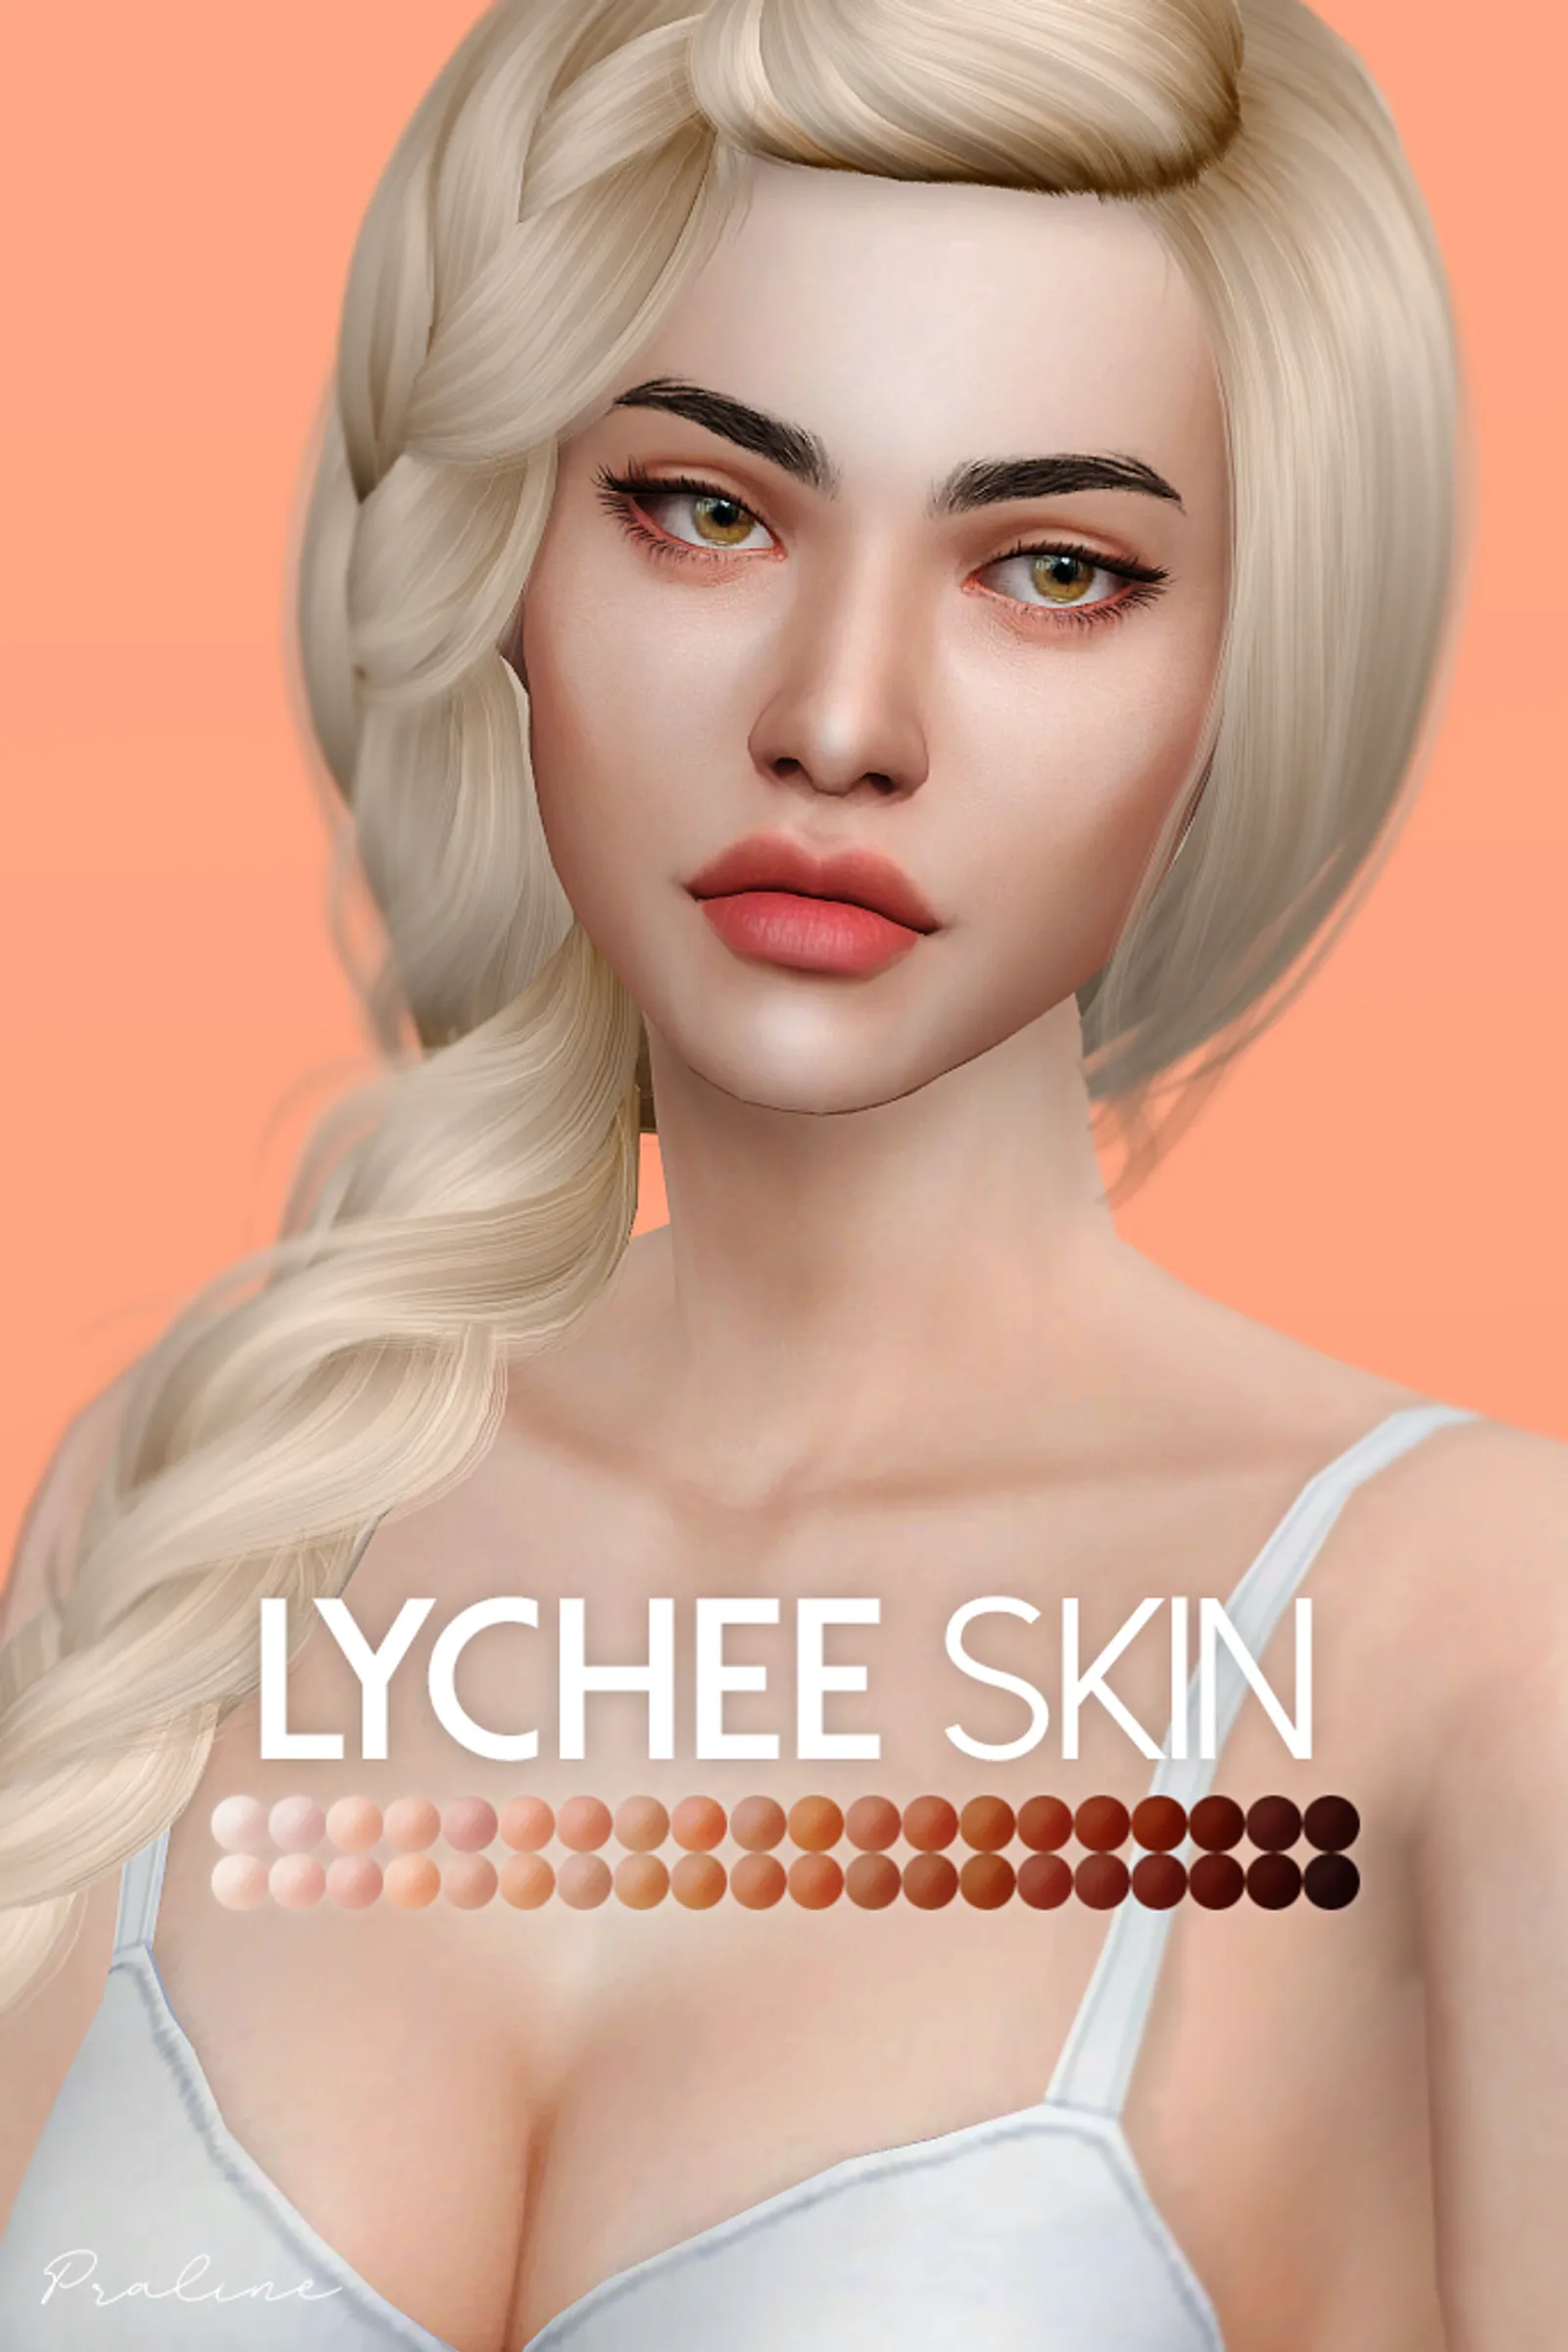 LYCHEE Skin & PERSIMMON Eyelids